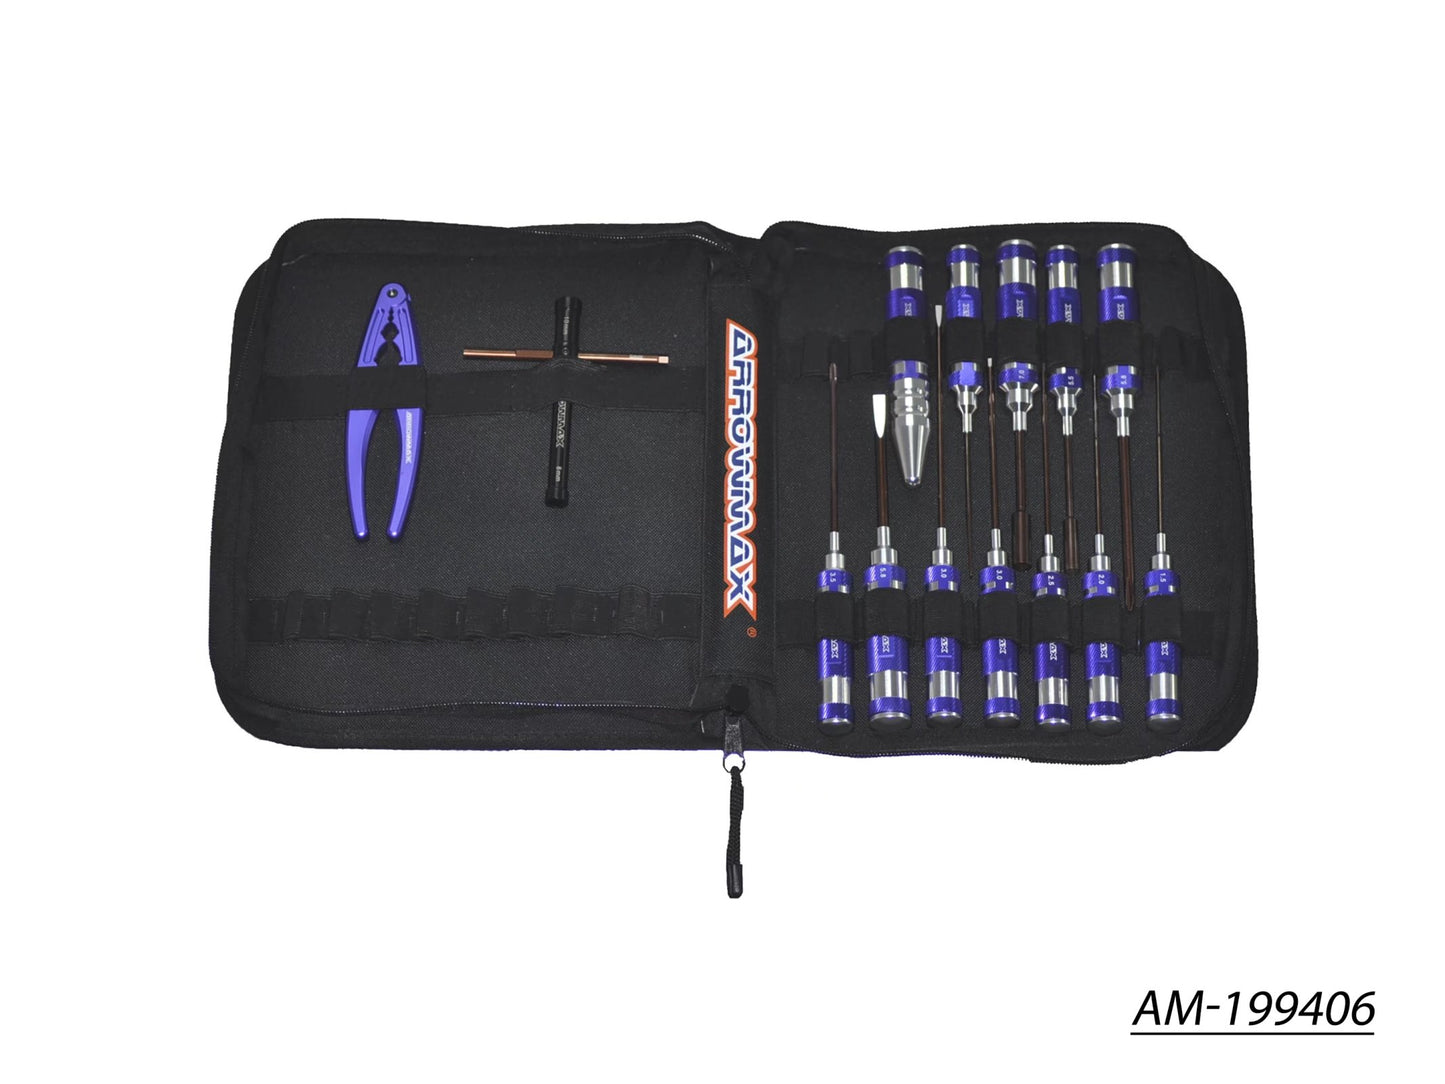 AM Toolset (14Pcs) With Tools bag (AM-199406)